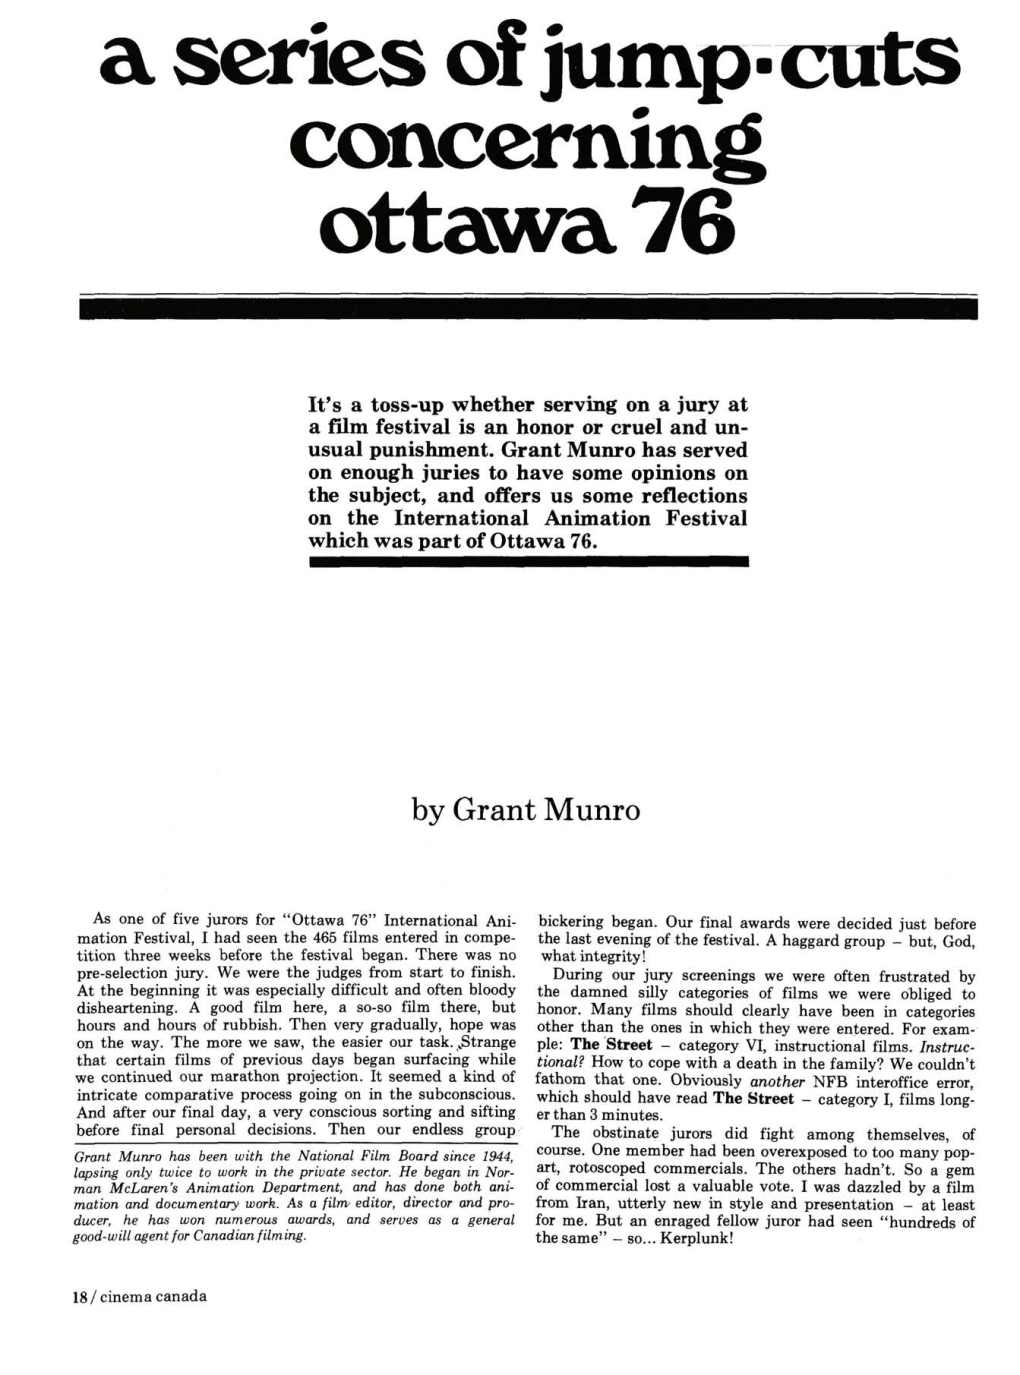 Cots Concerning Ottawa 76